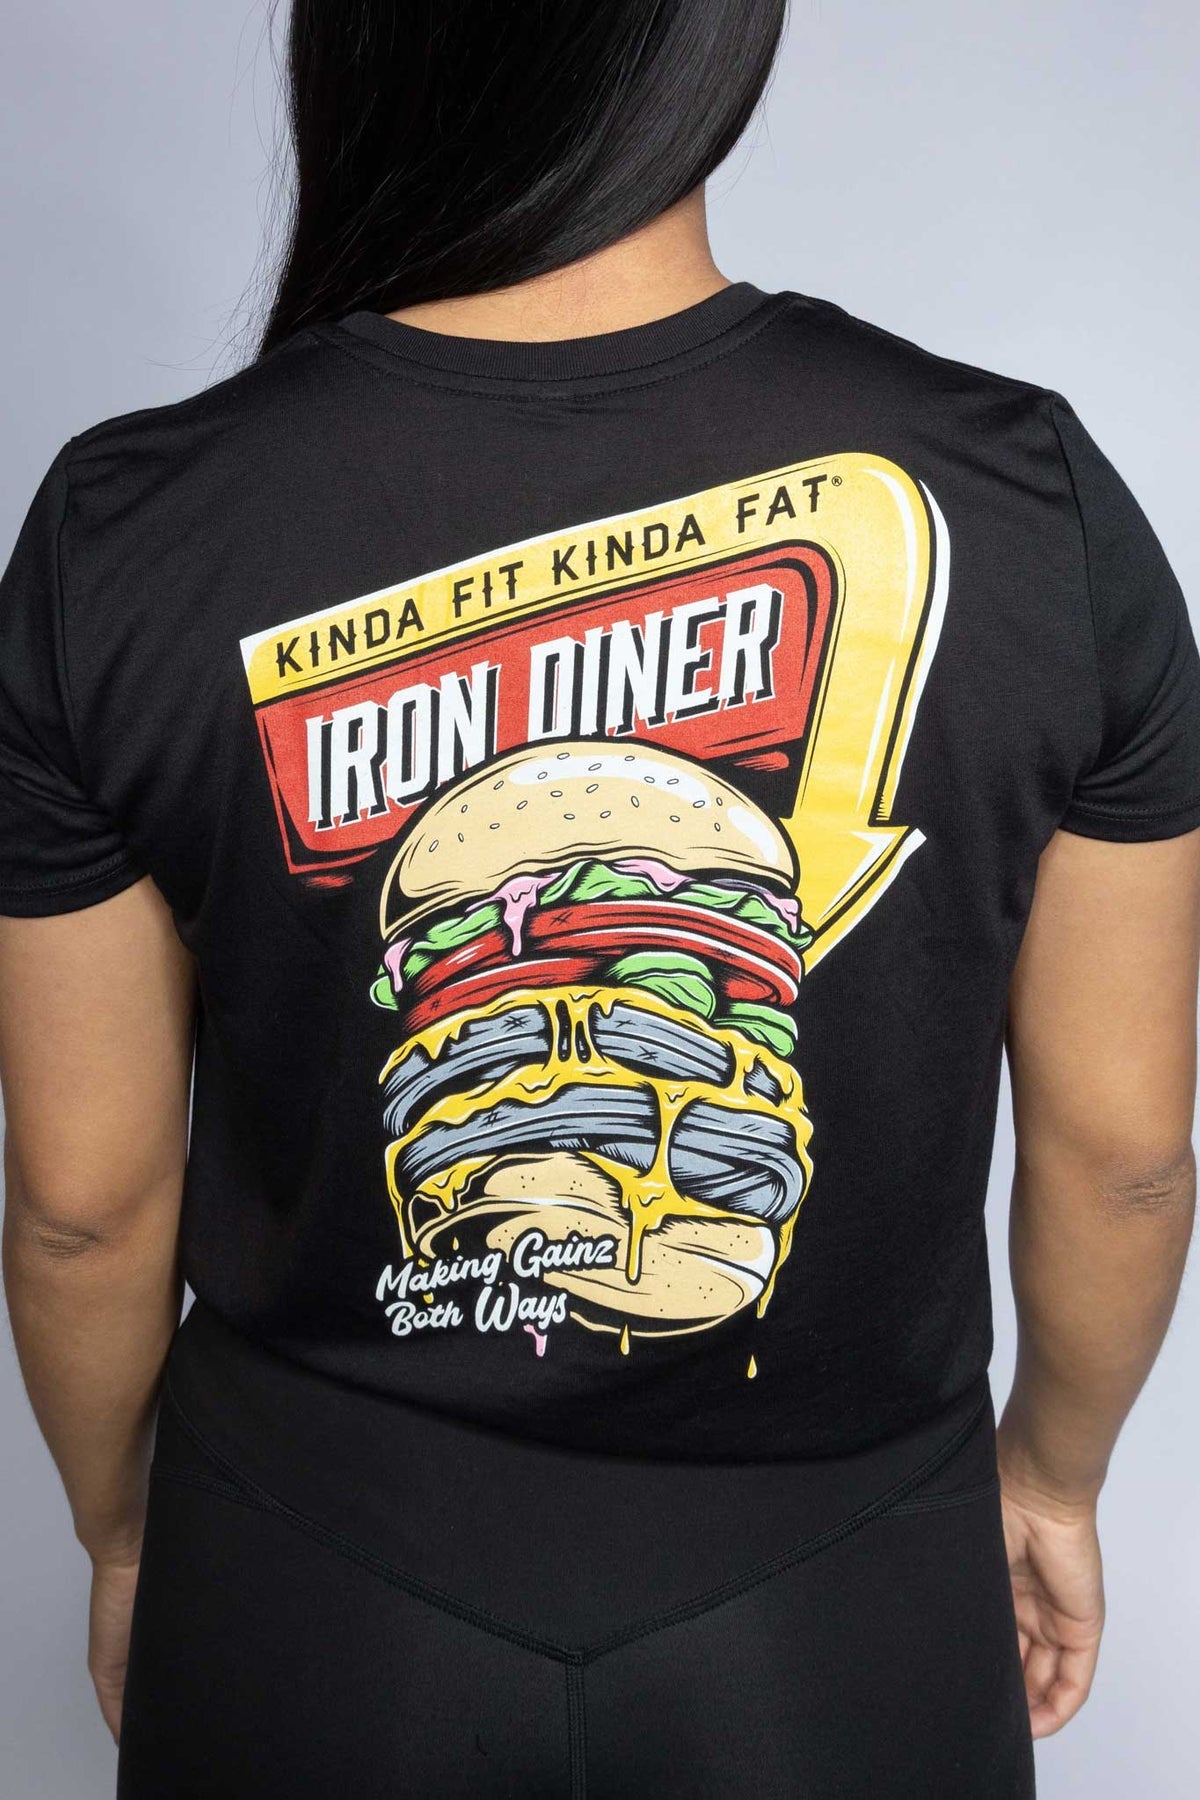 Kinda Fit Kinda Fat Iron Diner Burger Cropped Tee